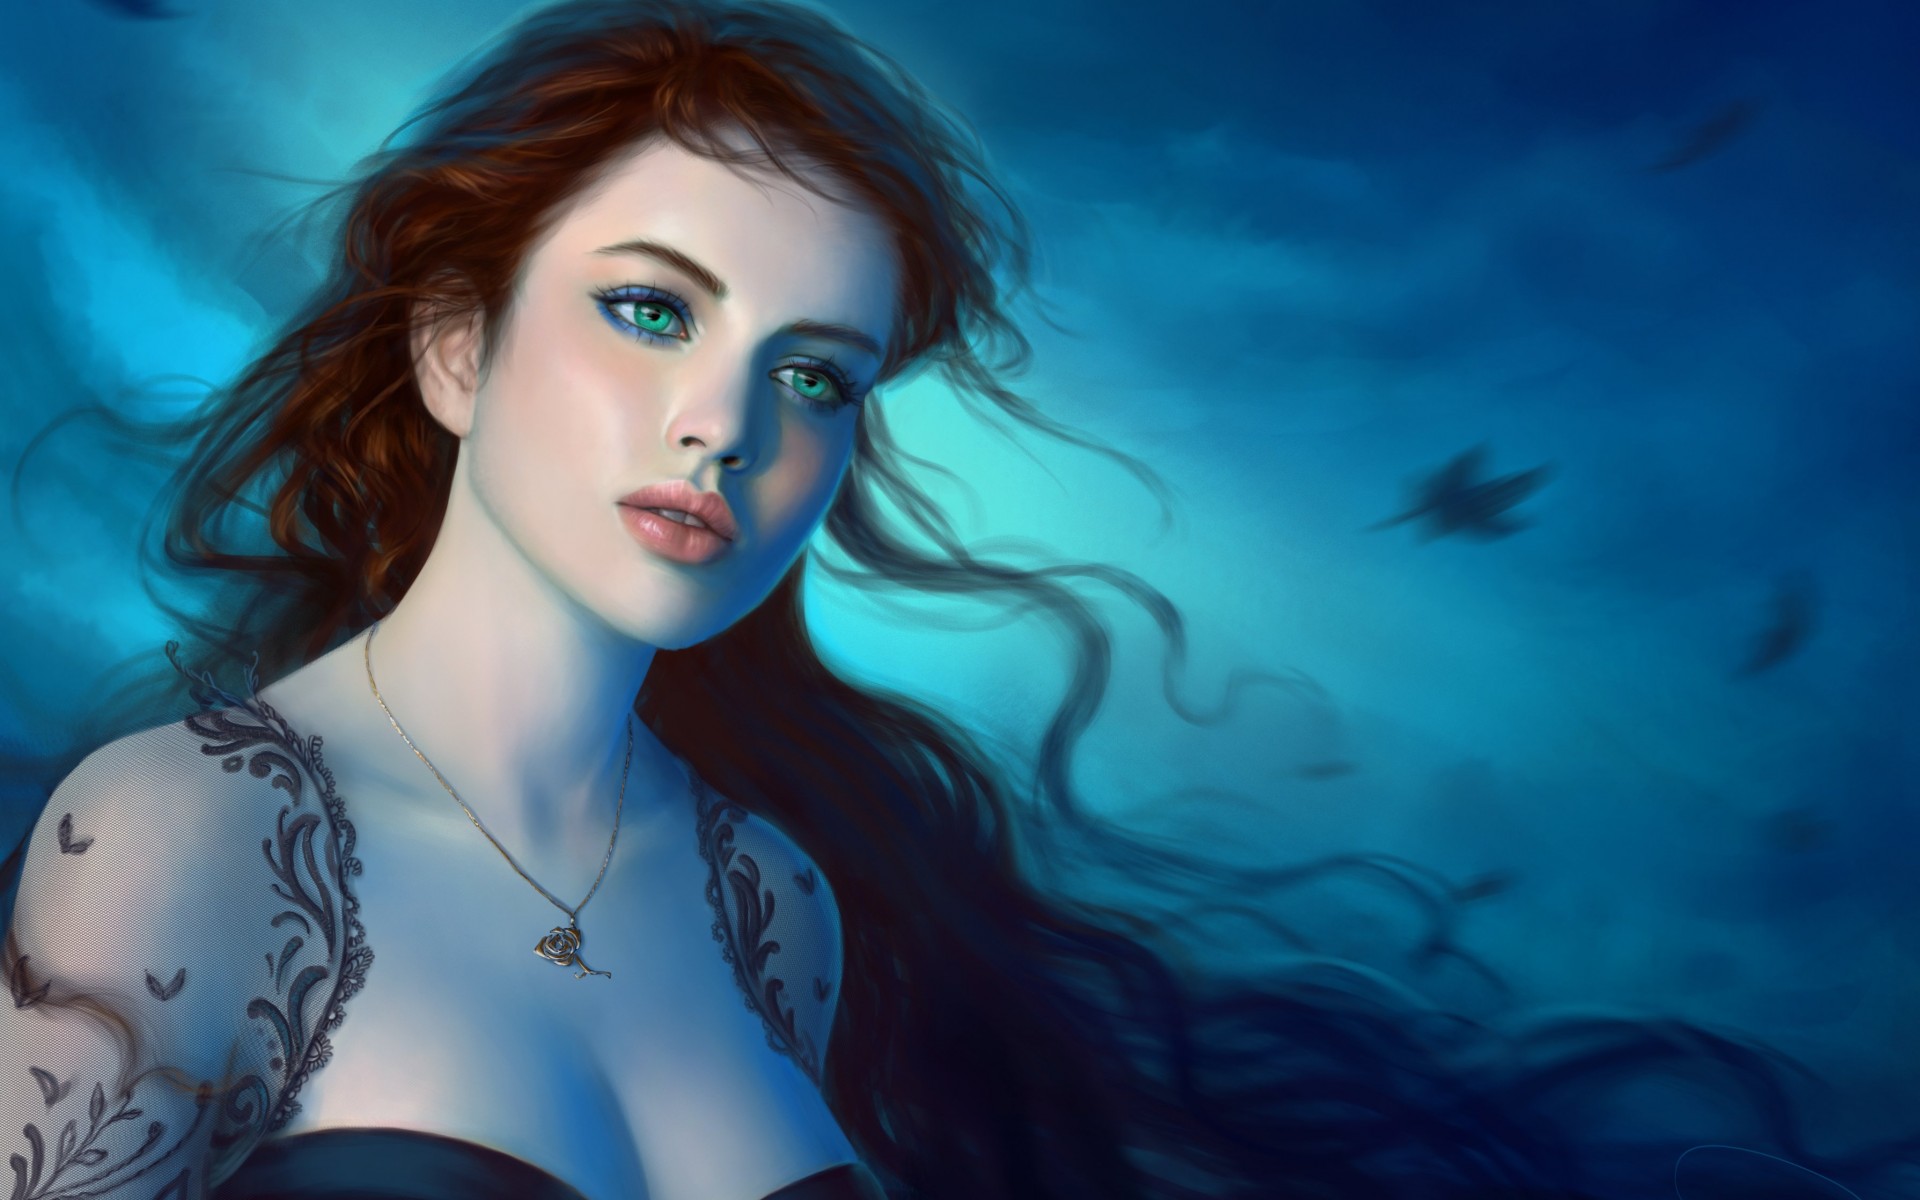 wallpaper girl pic,blue,cg artwork,beauty,sky,fictional character